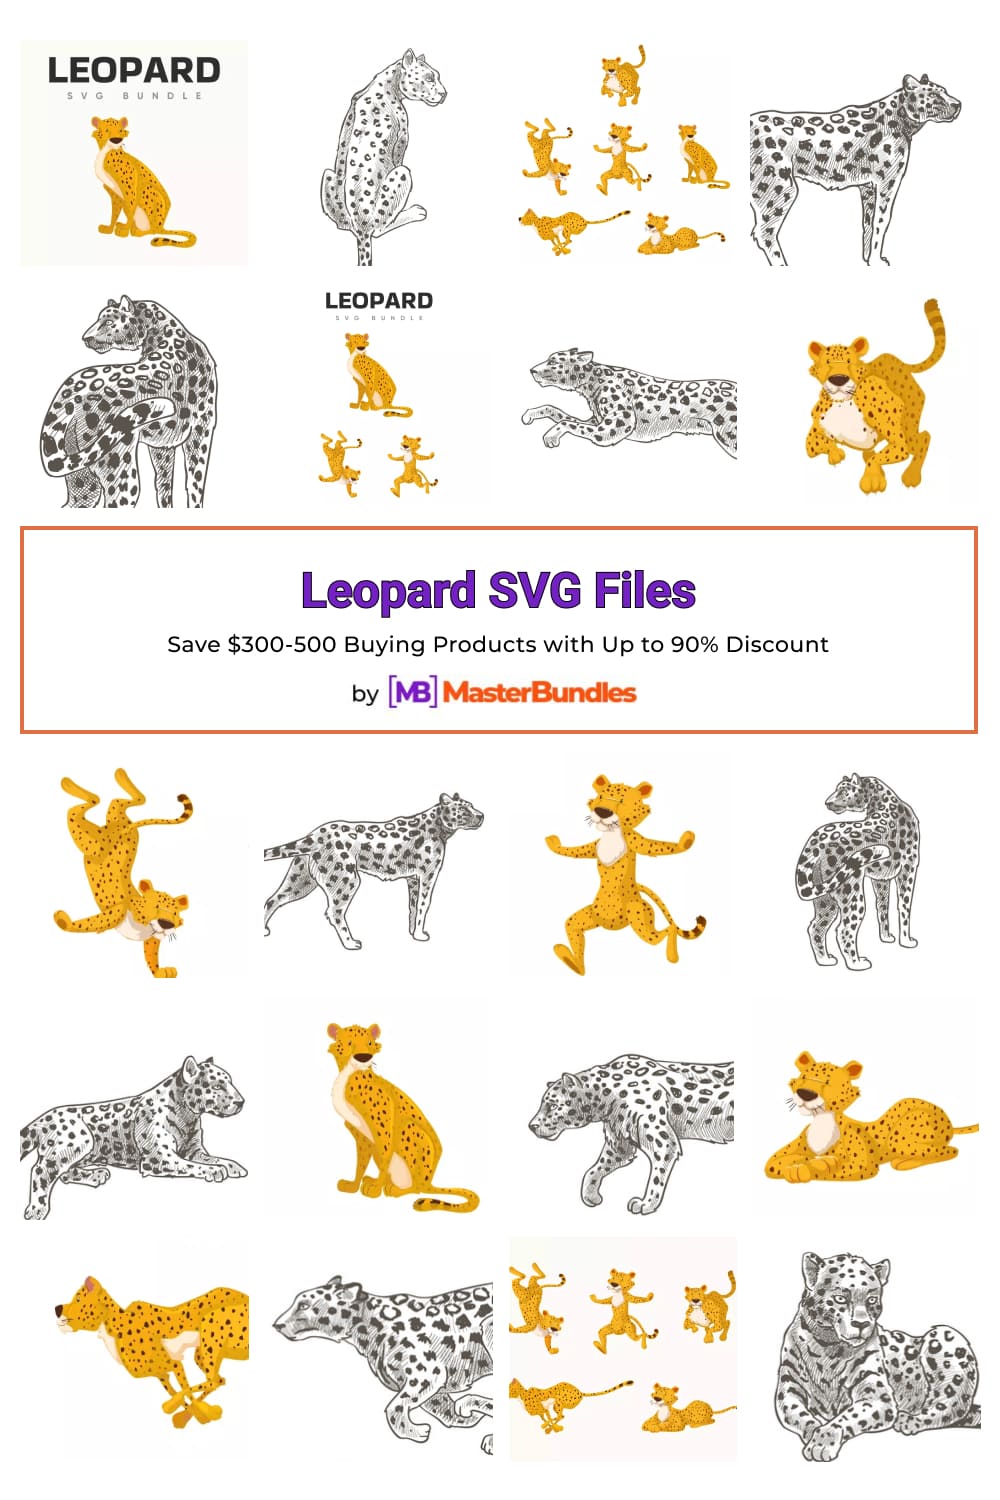 Leopard SVG Files Pinterest image.